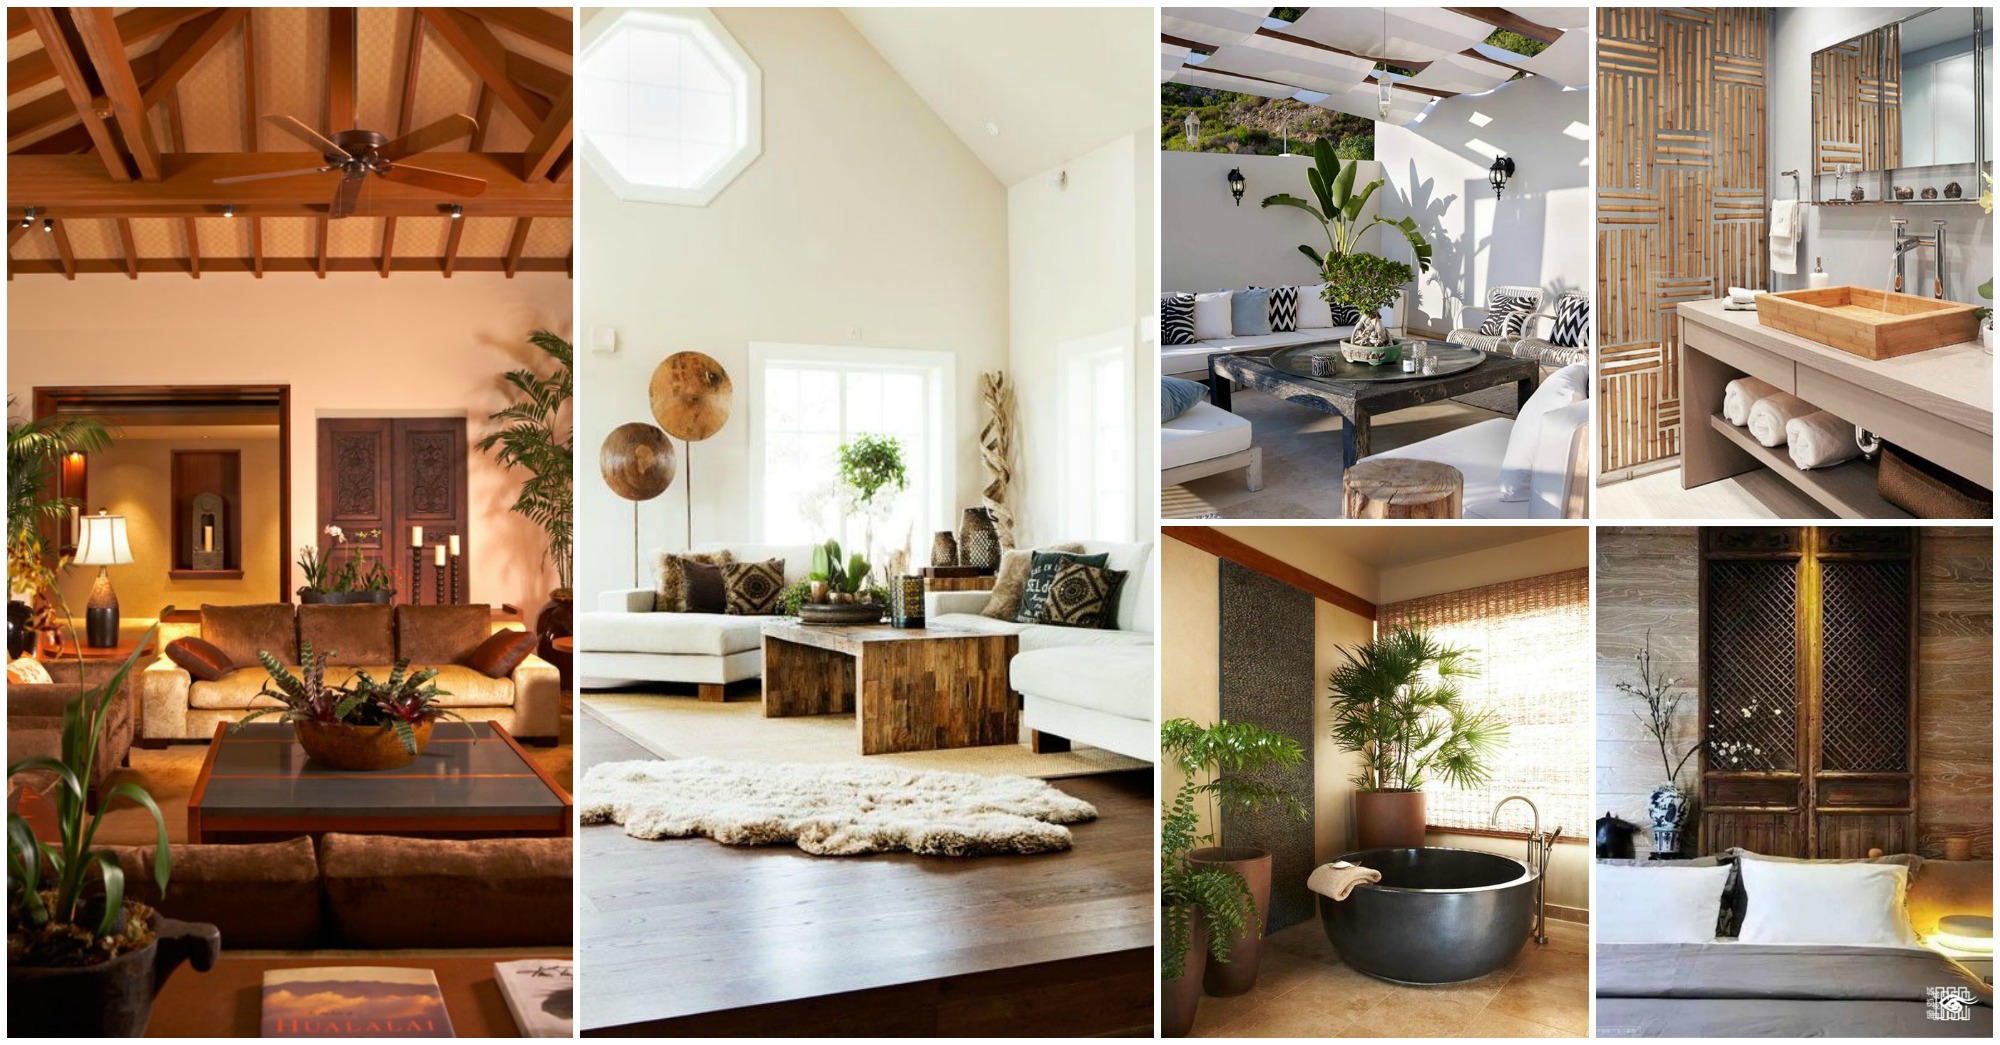 Modern Asian Home Decor Ideas That Will Amaze You